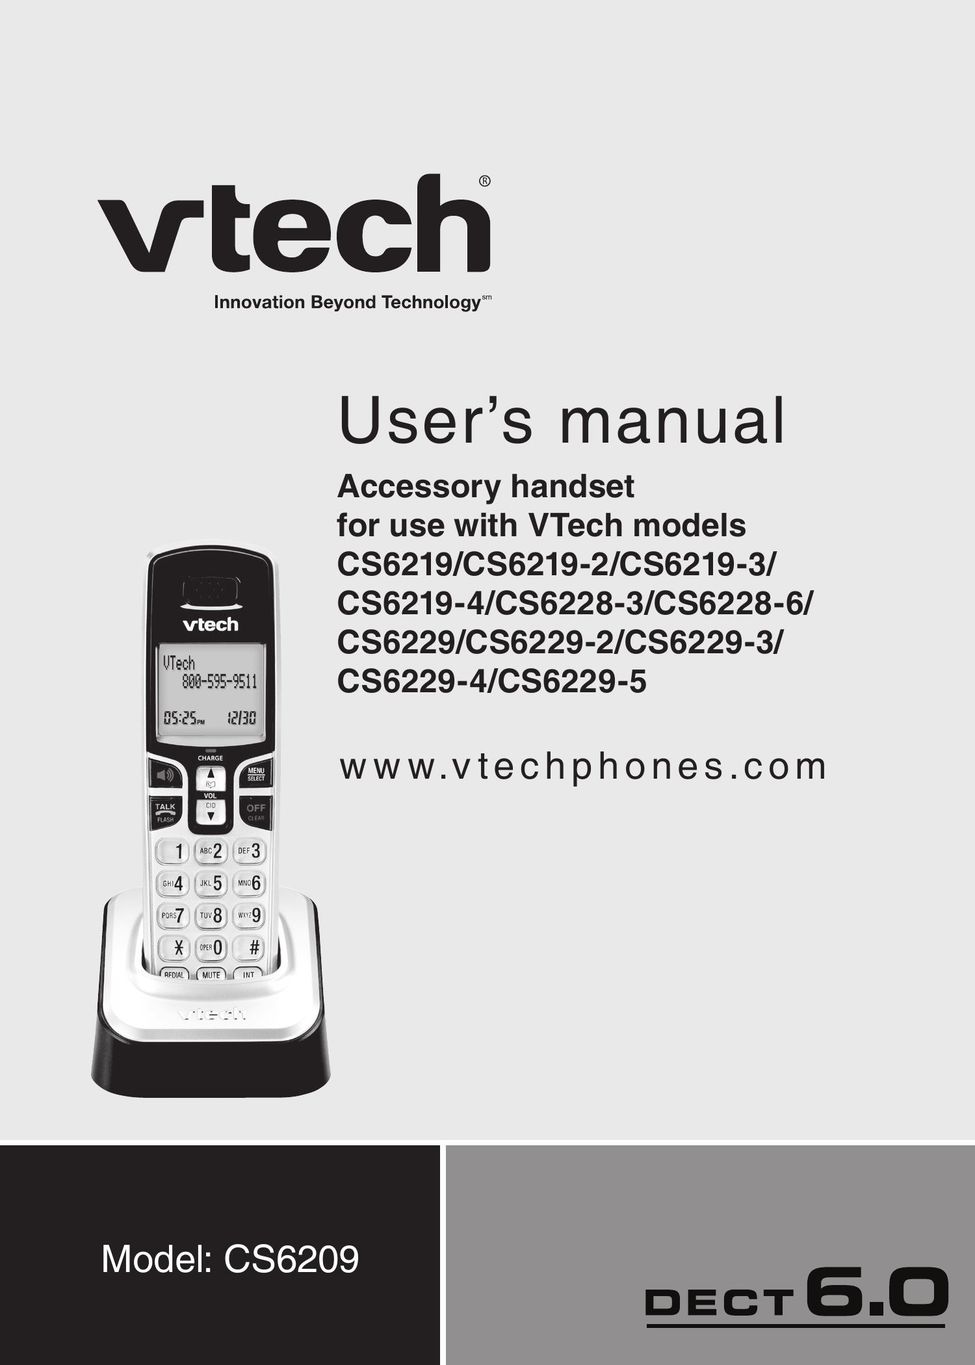 VTech CS6229-5 Telephone User Manual